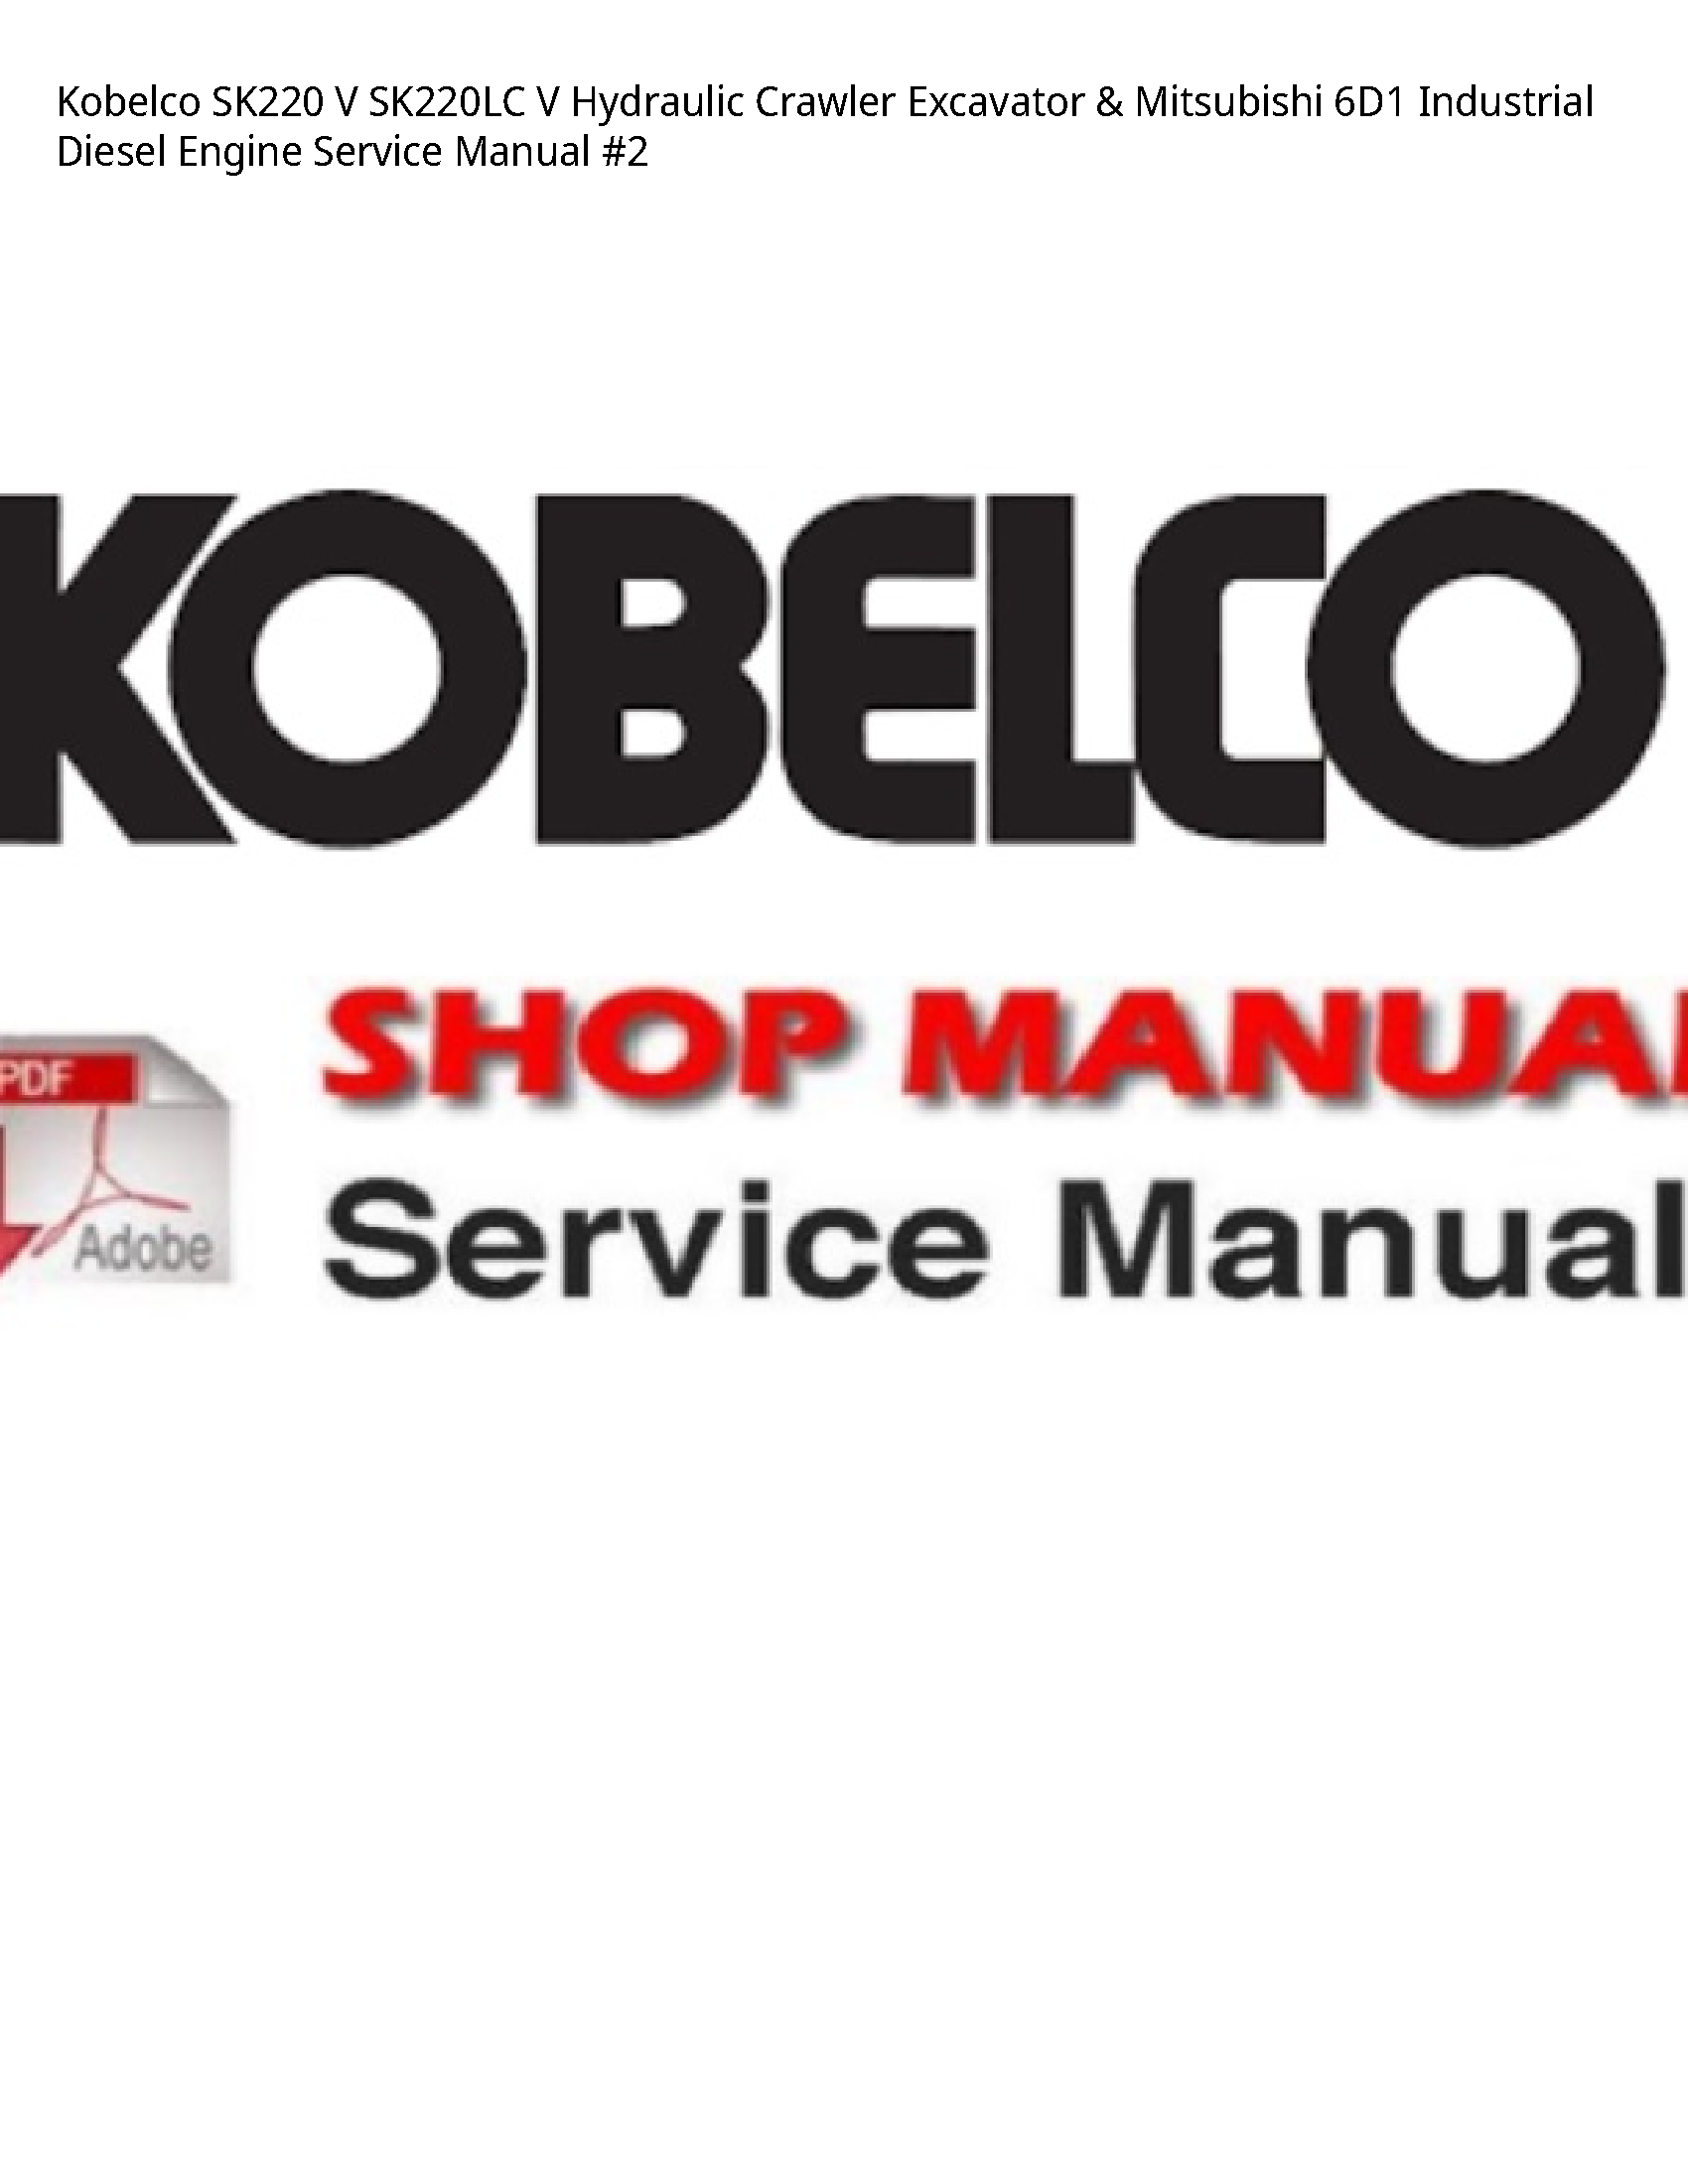 Kobelco SK220 Hydraulic Crawler Excavator Mitsubishi Industrial Diesel Engine Service manual